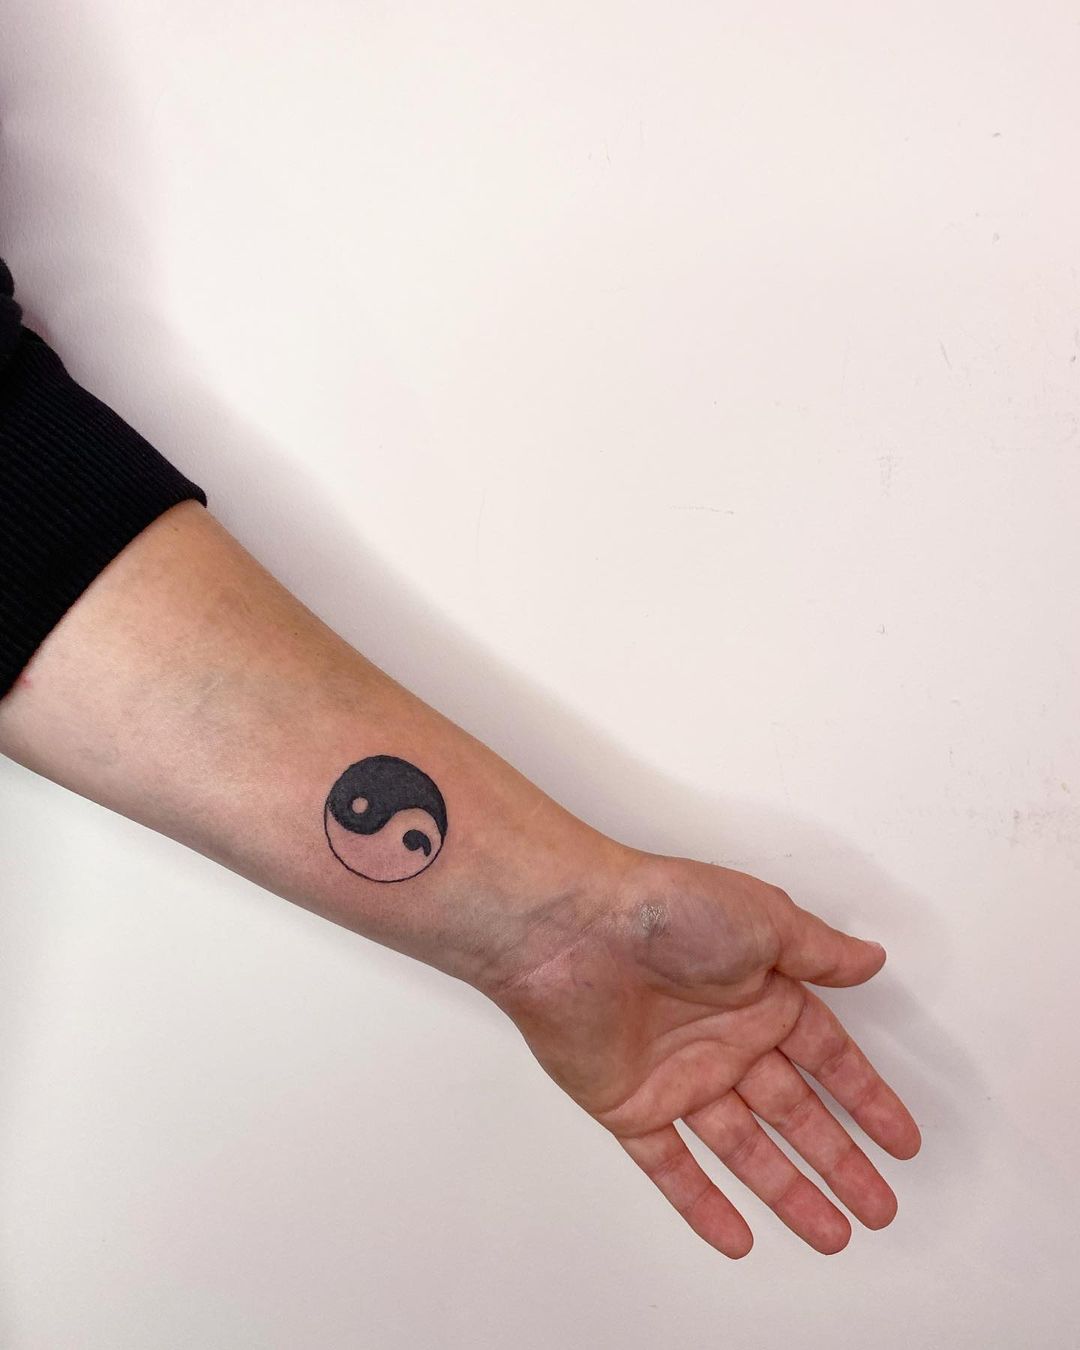 27+ Semicolon Tattoo Ideas that are Powerful and Impactful - Tikli